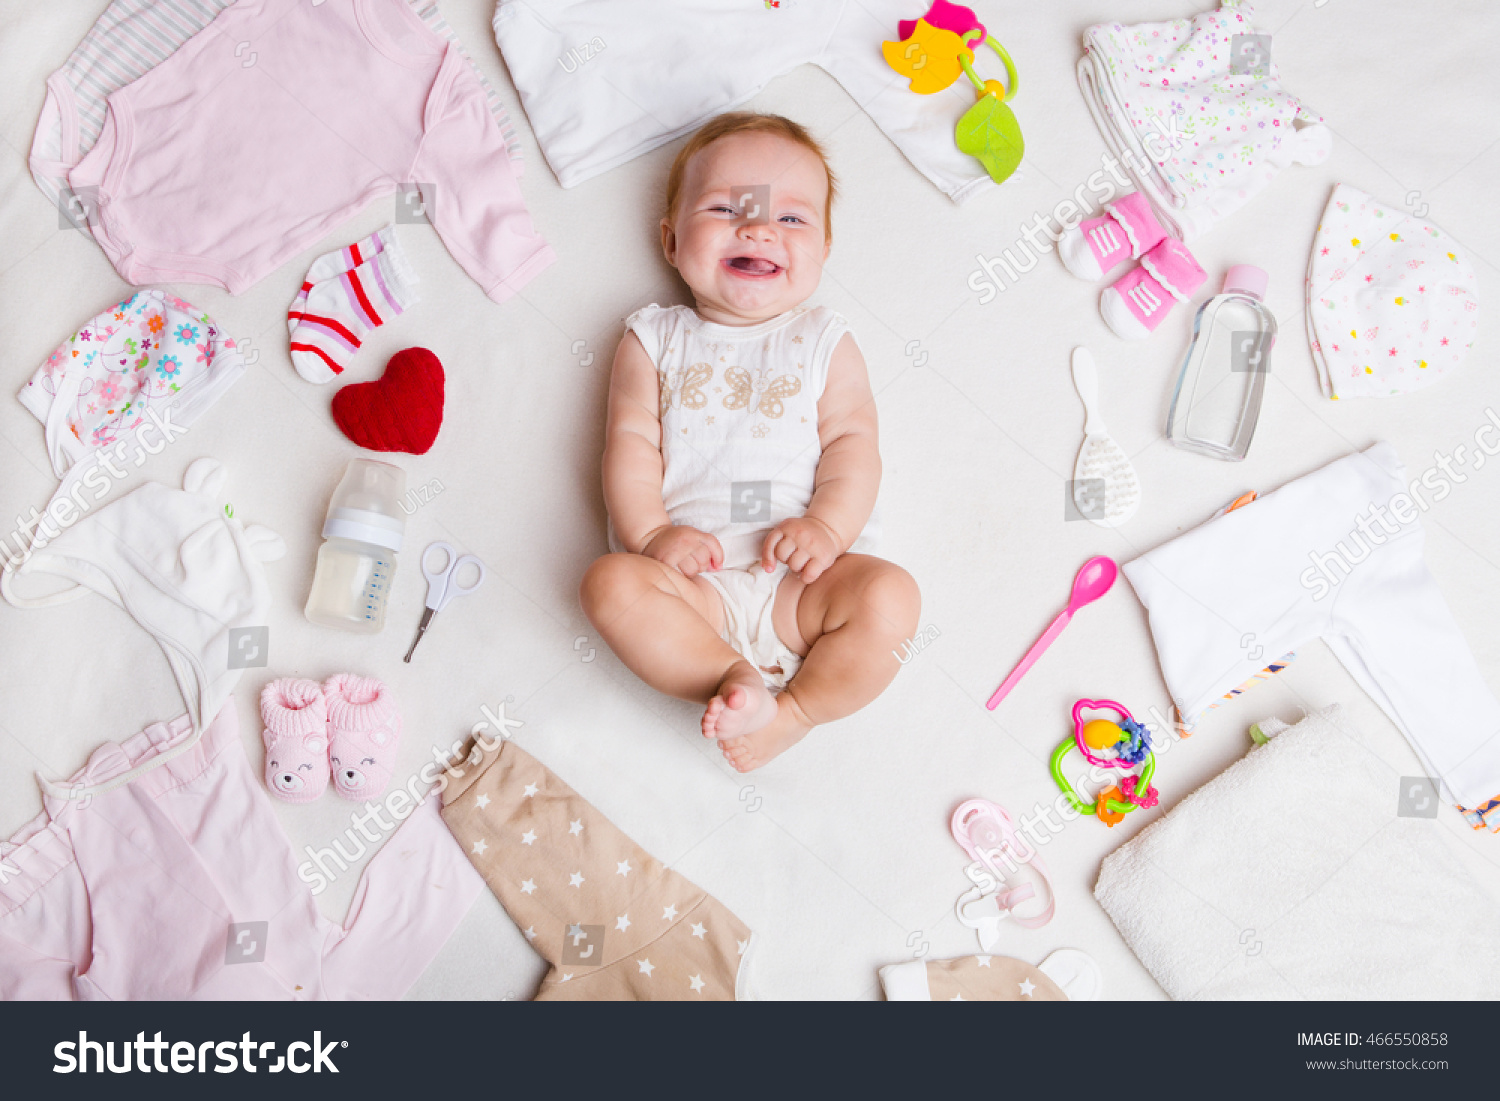 Baby On White Background Clothing Toiletries Stock Photo 466550858 ...